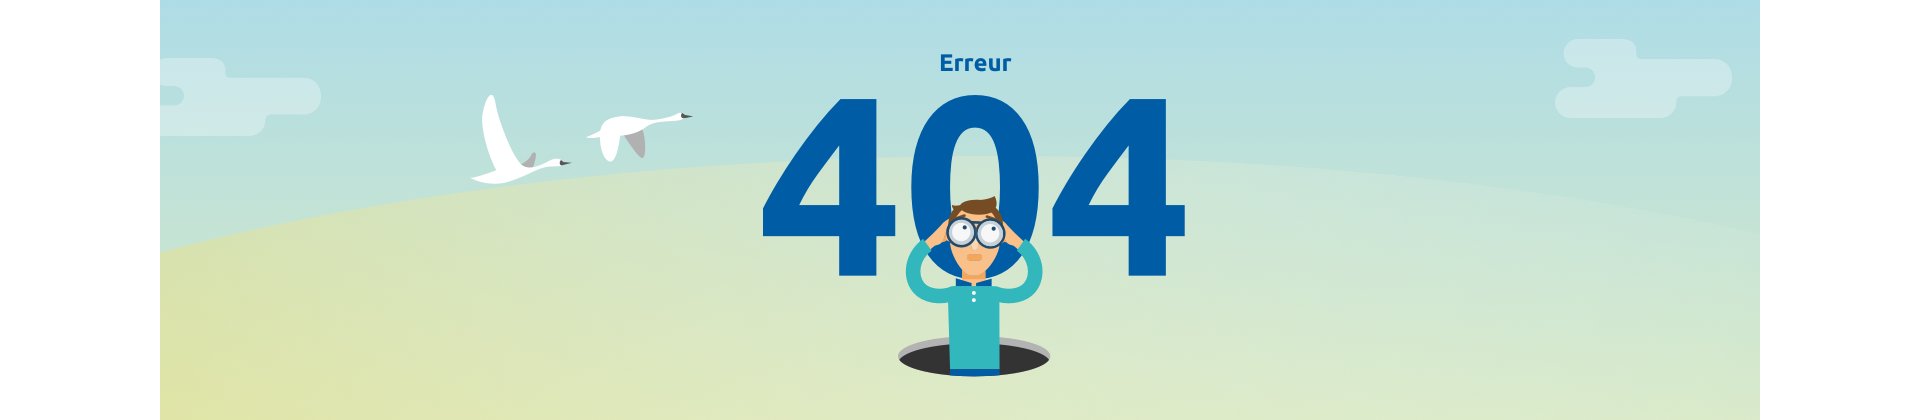 jubau page 404